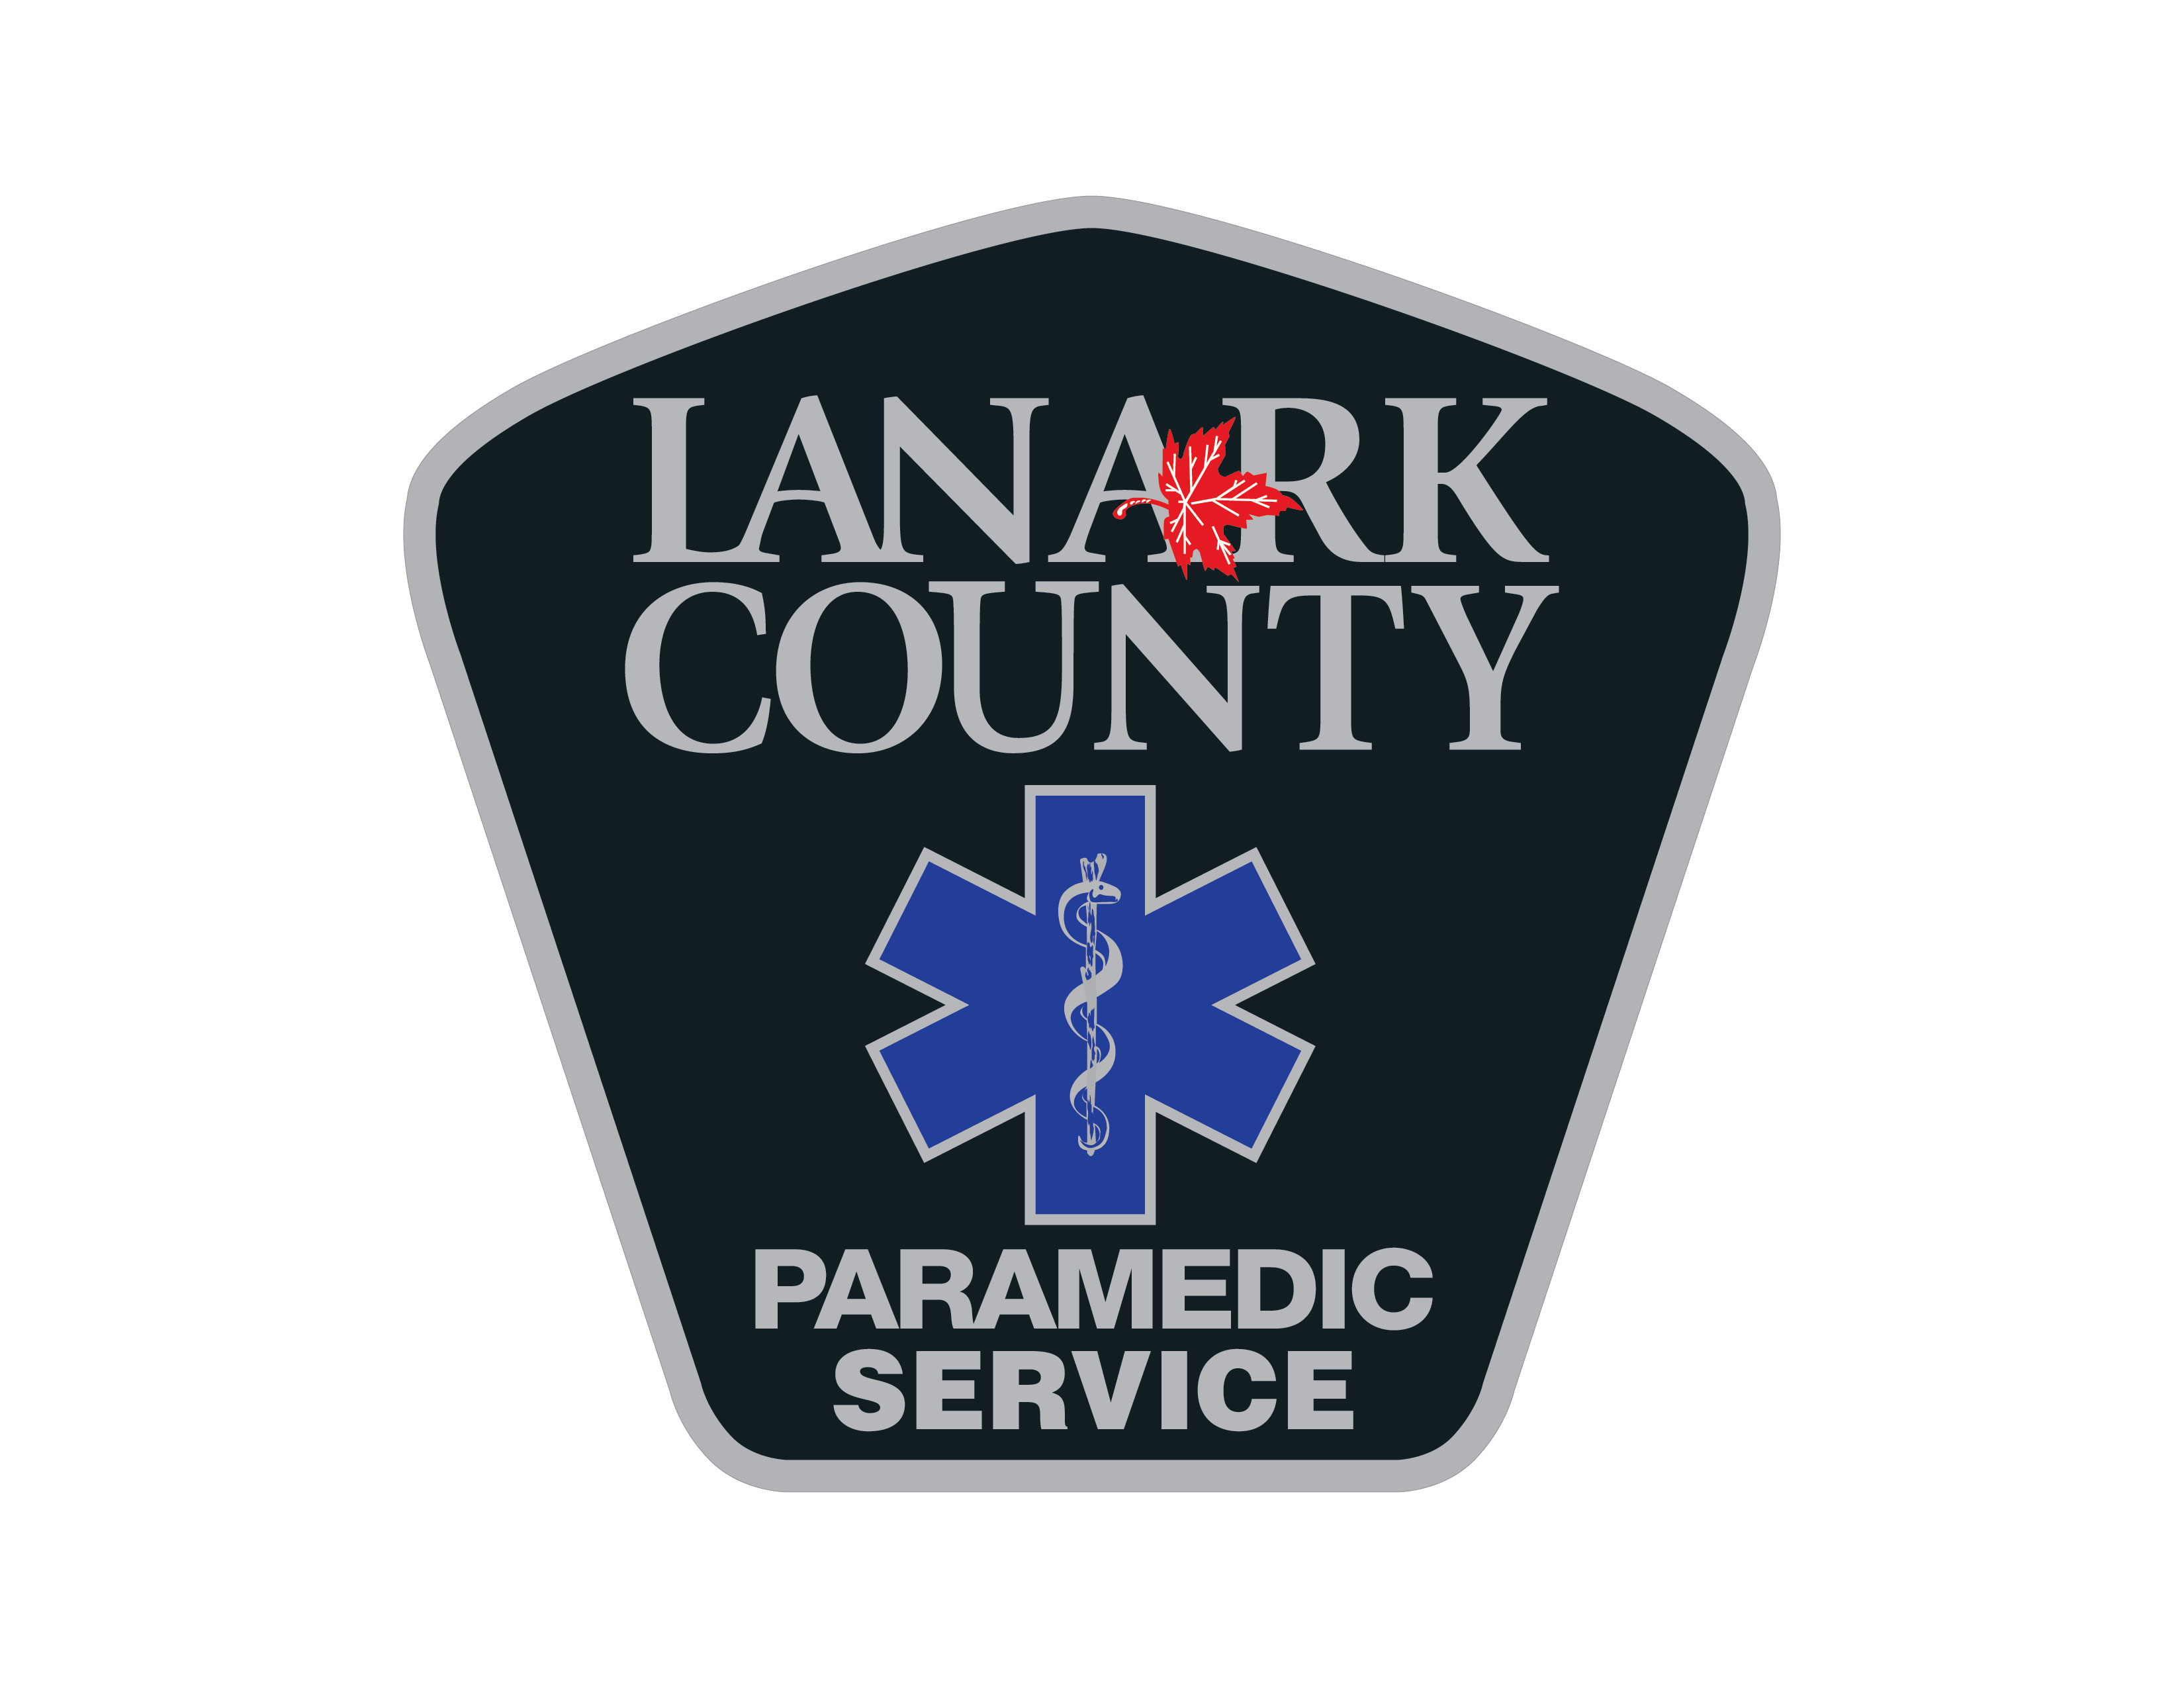 Lanark County Paramedic Service E-Learning Site